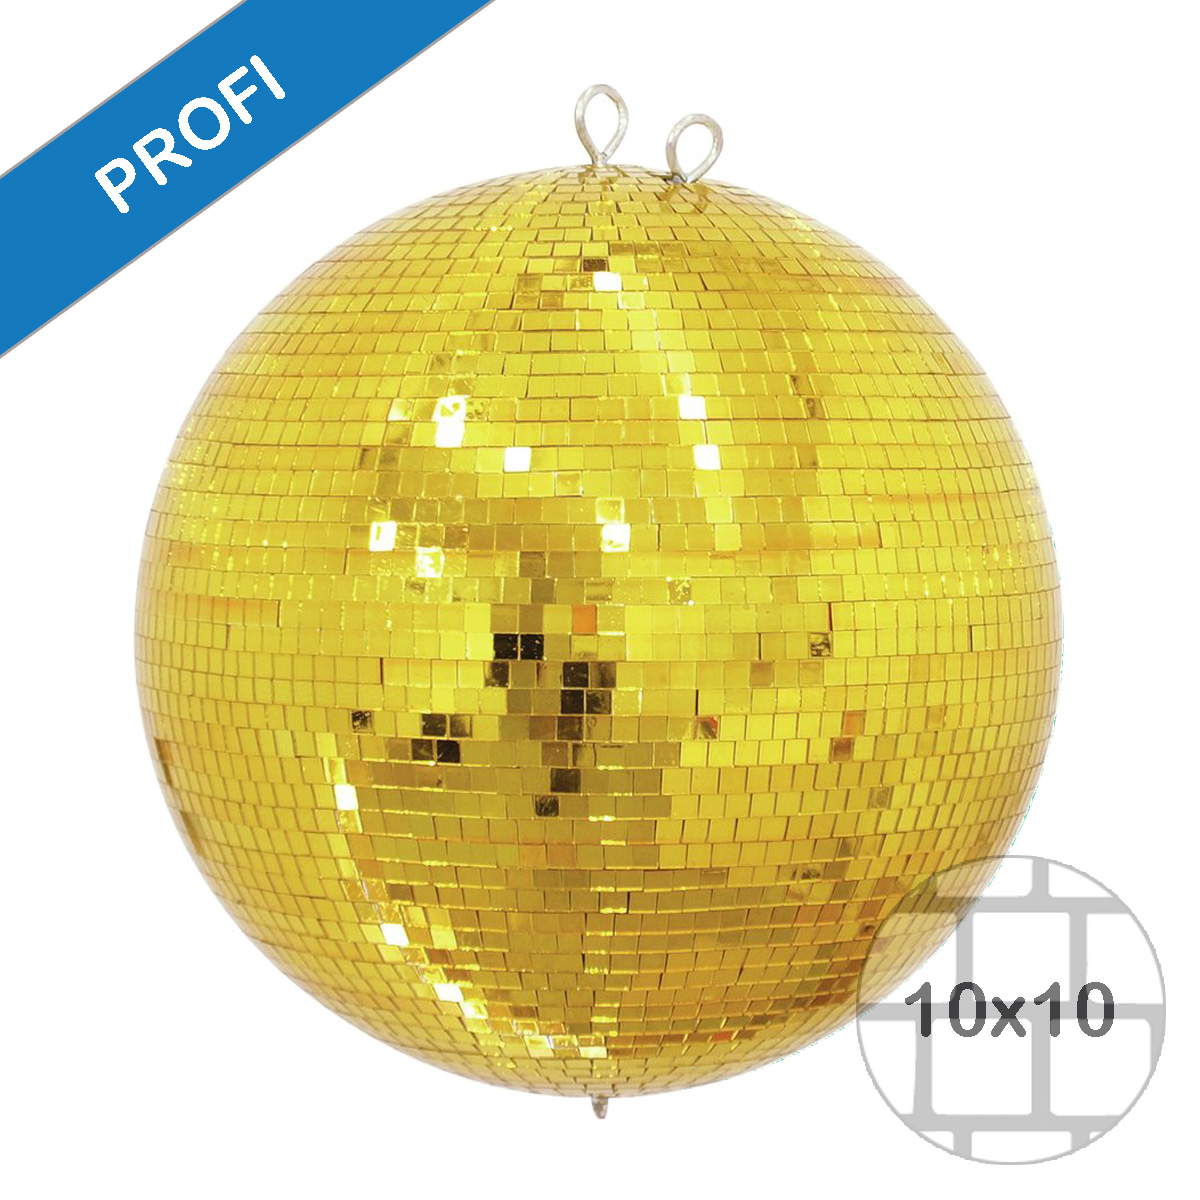 Spiegelkugel 40cm gold- Diskokugel (Discokugel) Party Lichteffekt - Echtglas - mirrorball safety gold color